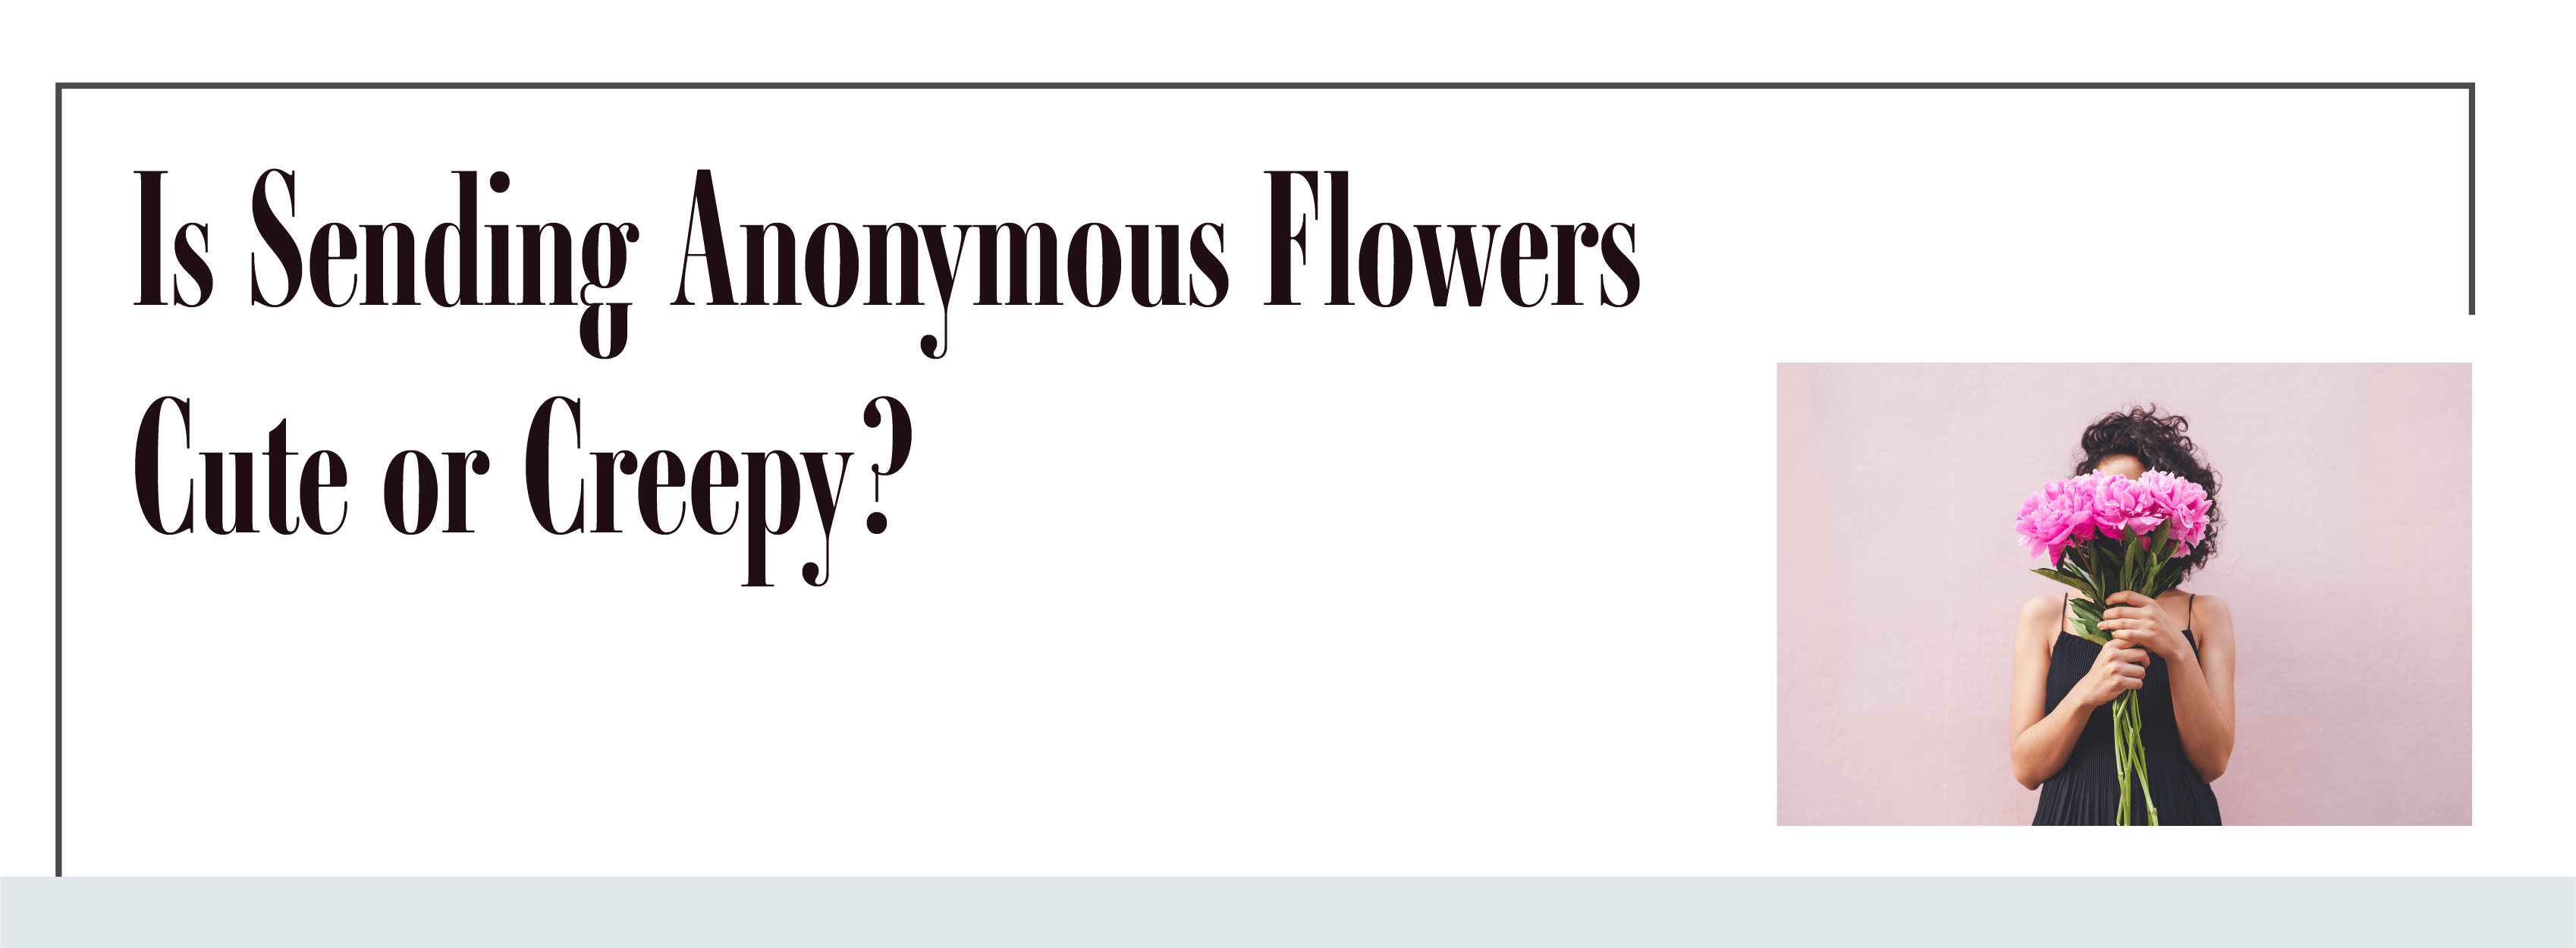 sending anonymous flowers